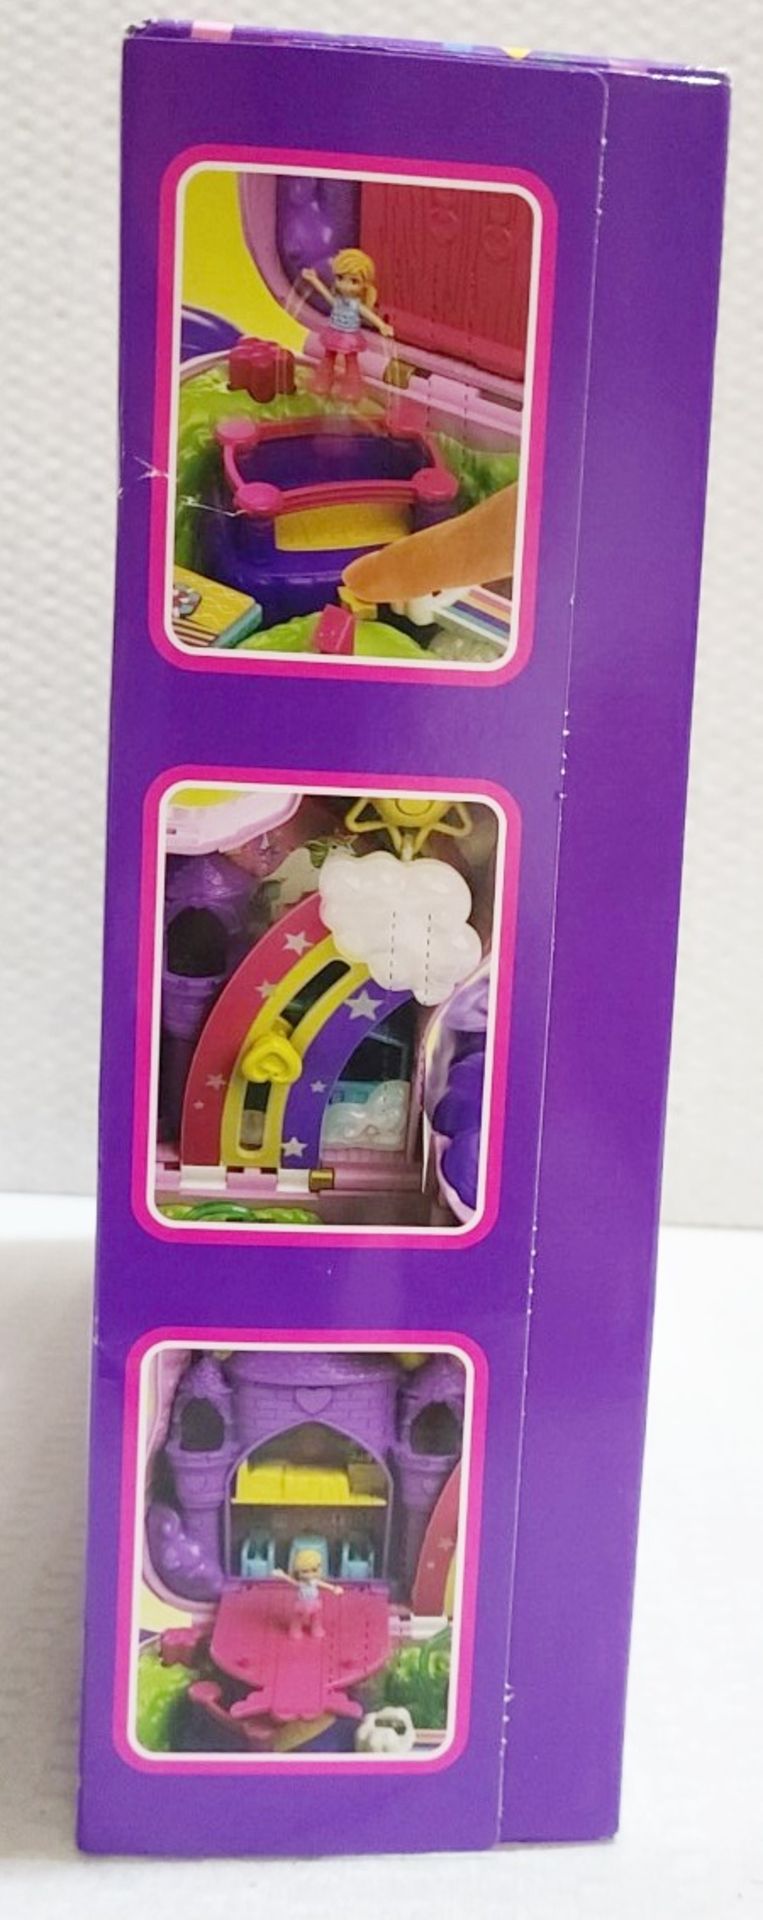 1 x MATTEL Polly Pocket Unicorn Party Playset - Original Price £39.95 - Image 4 of 4